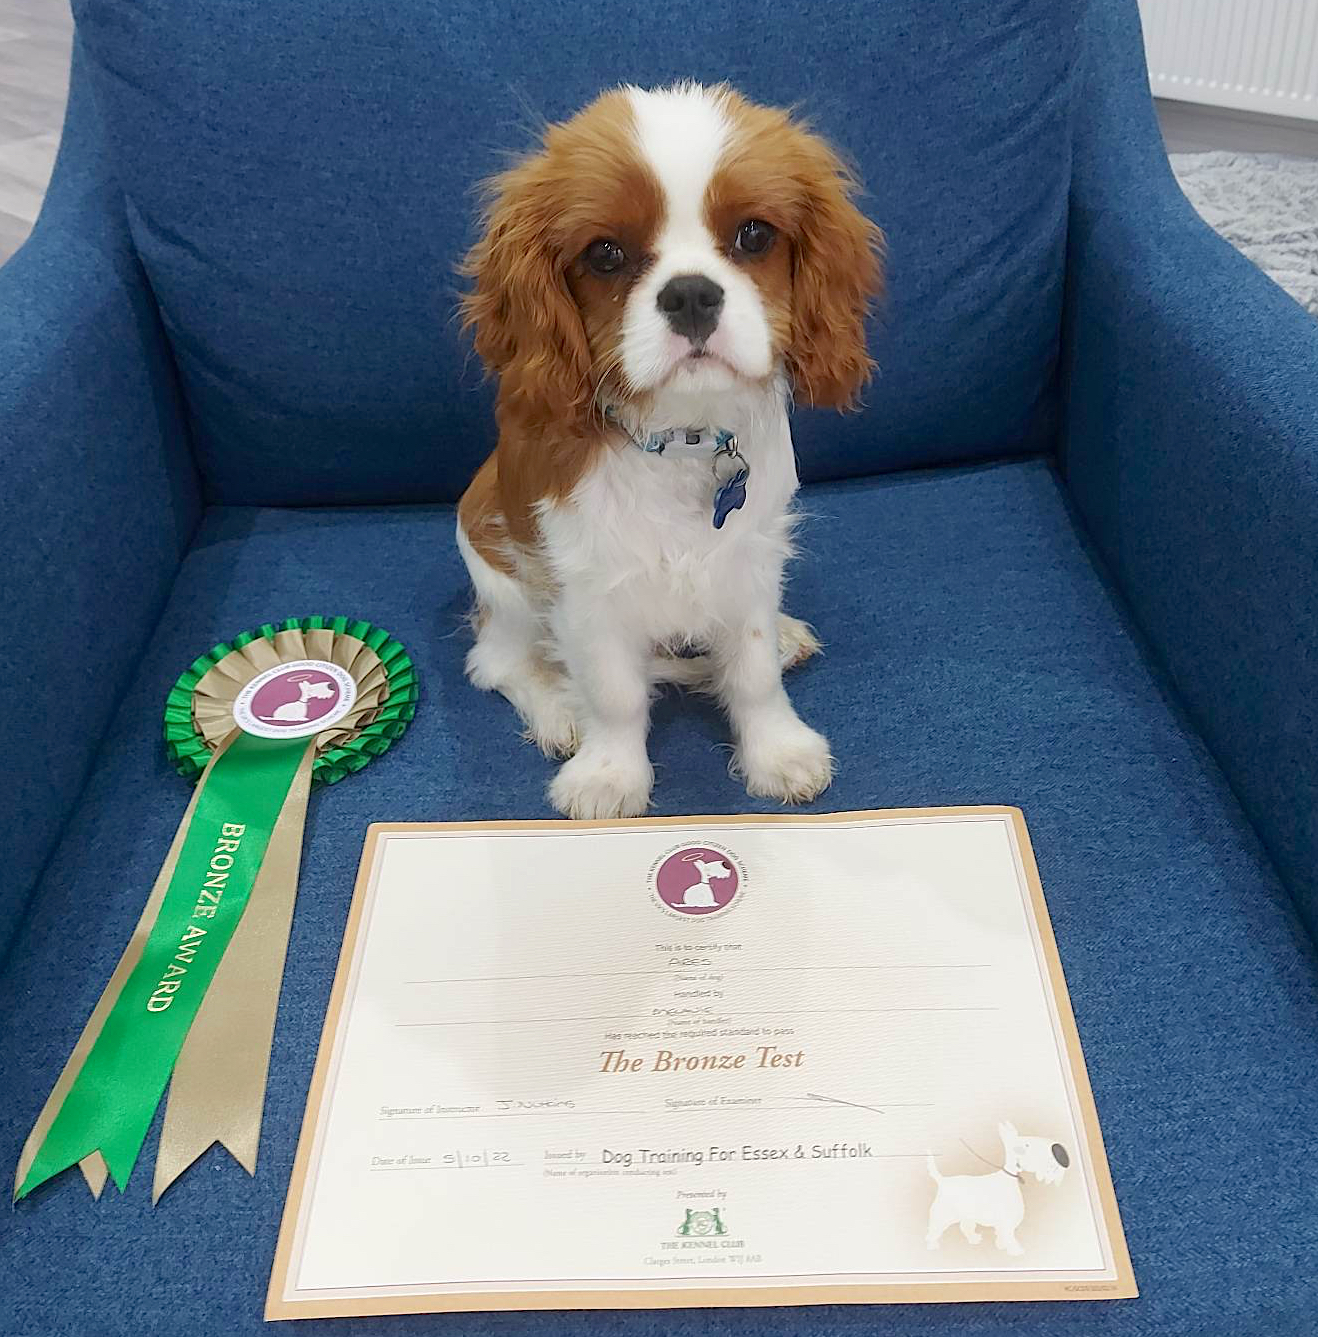 Puppy Cavalier King Charles Spaniel with Kennel Club award